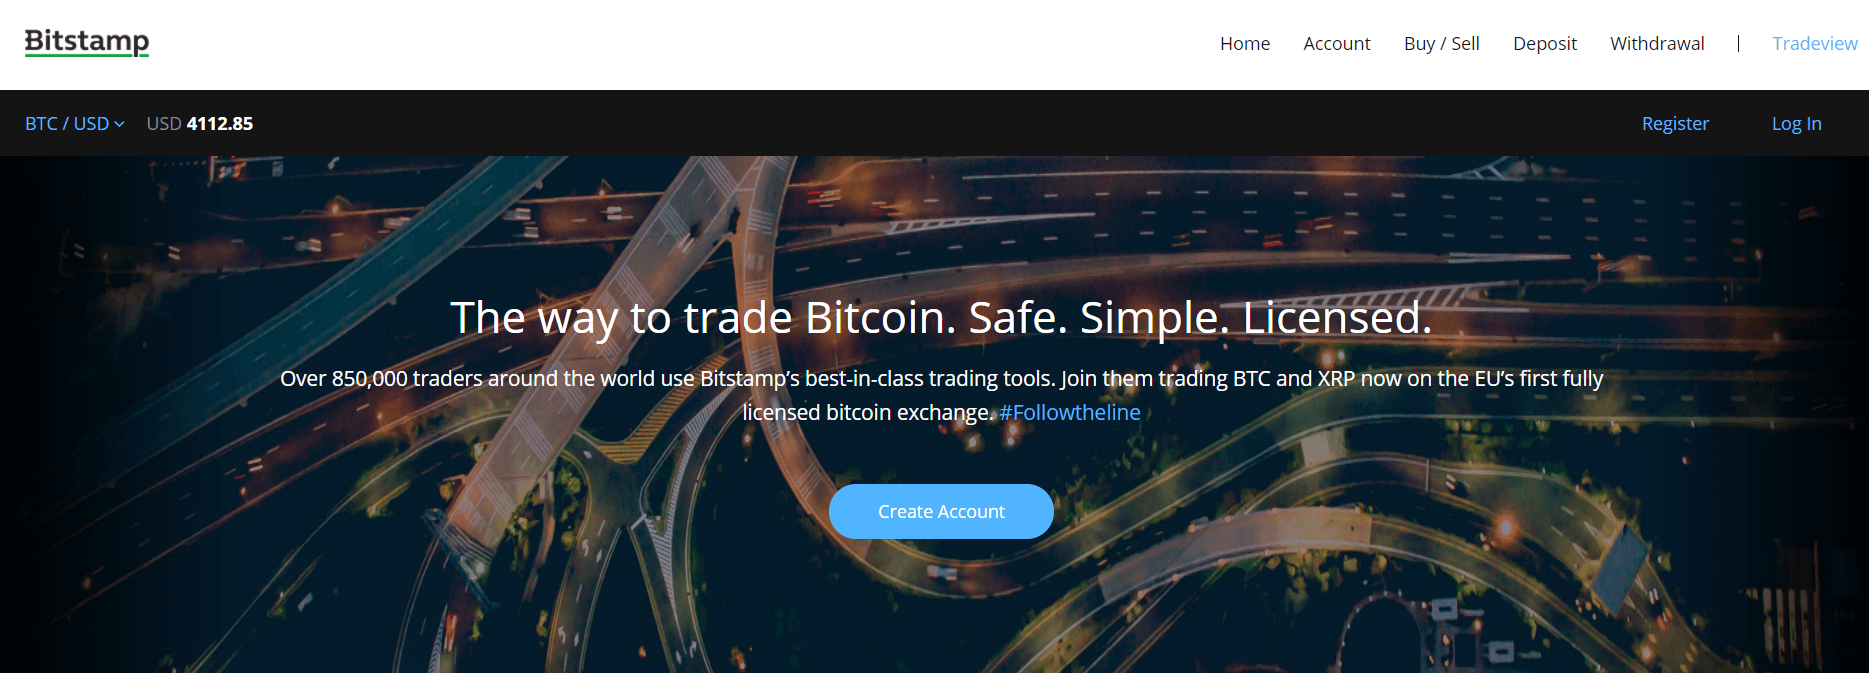 Exchange bitcoin with Bitstamp